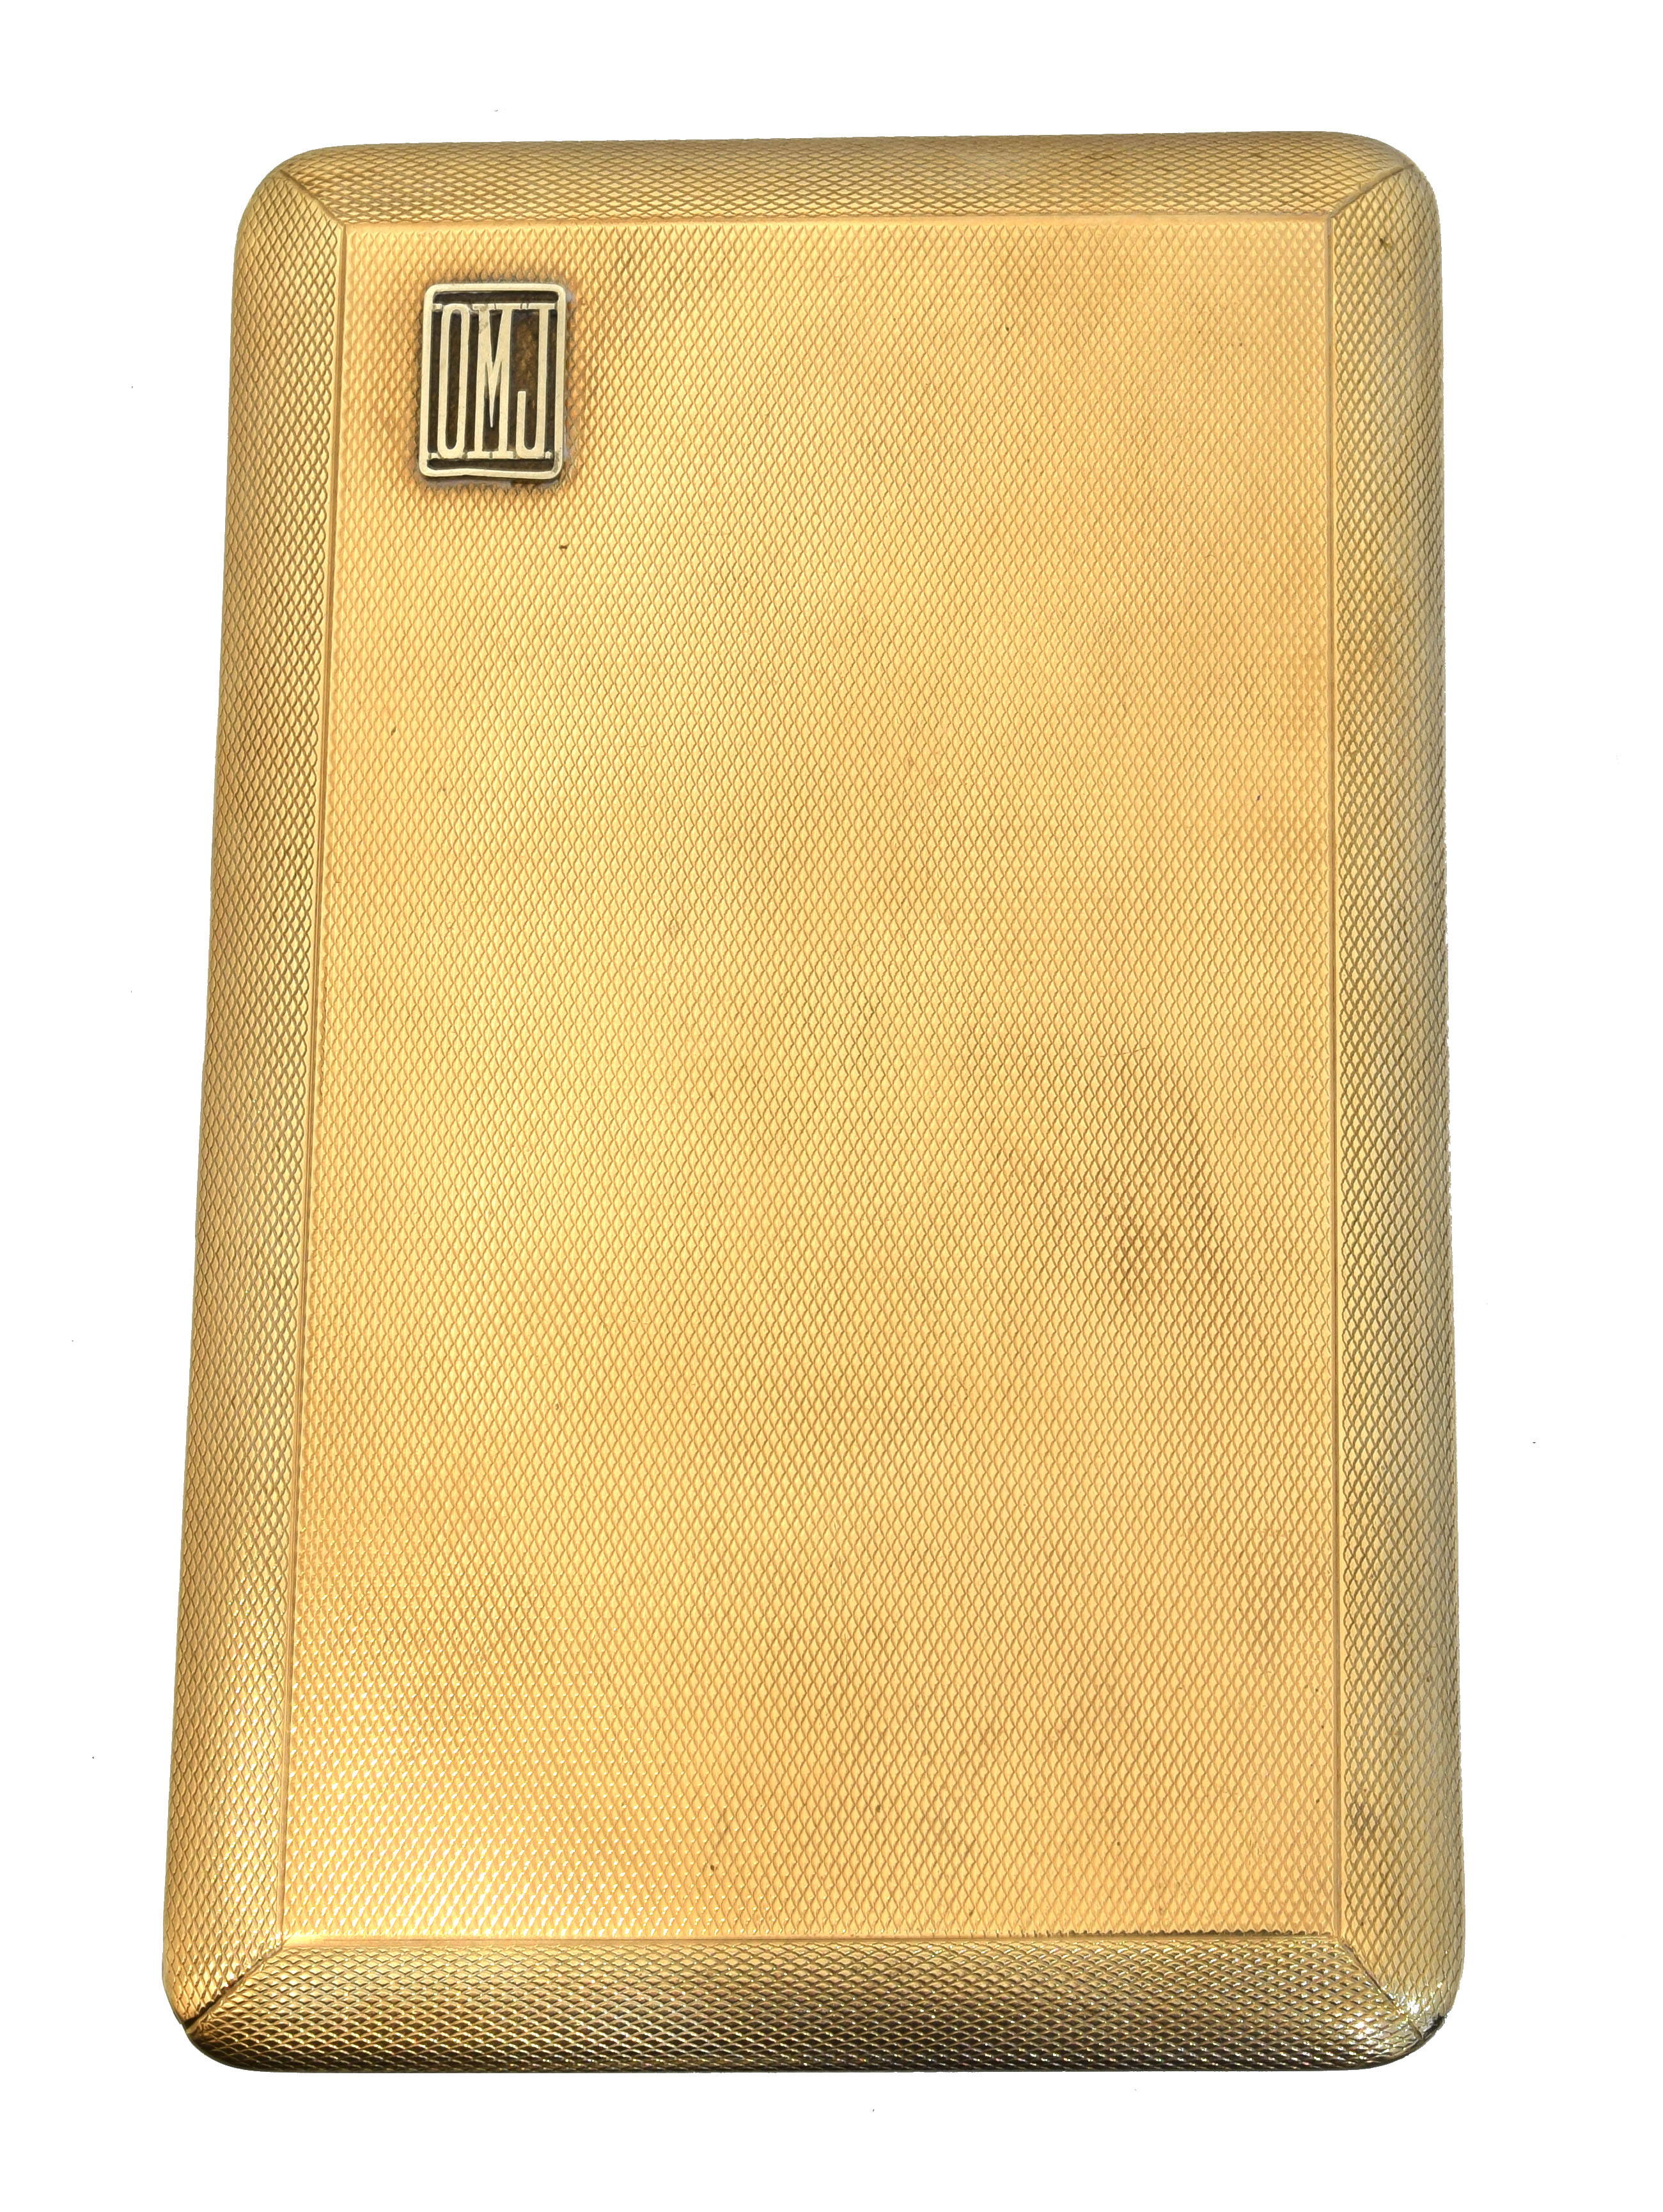 Asprey gold cigarette case